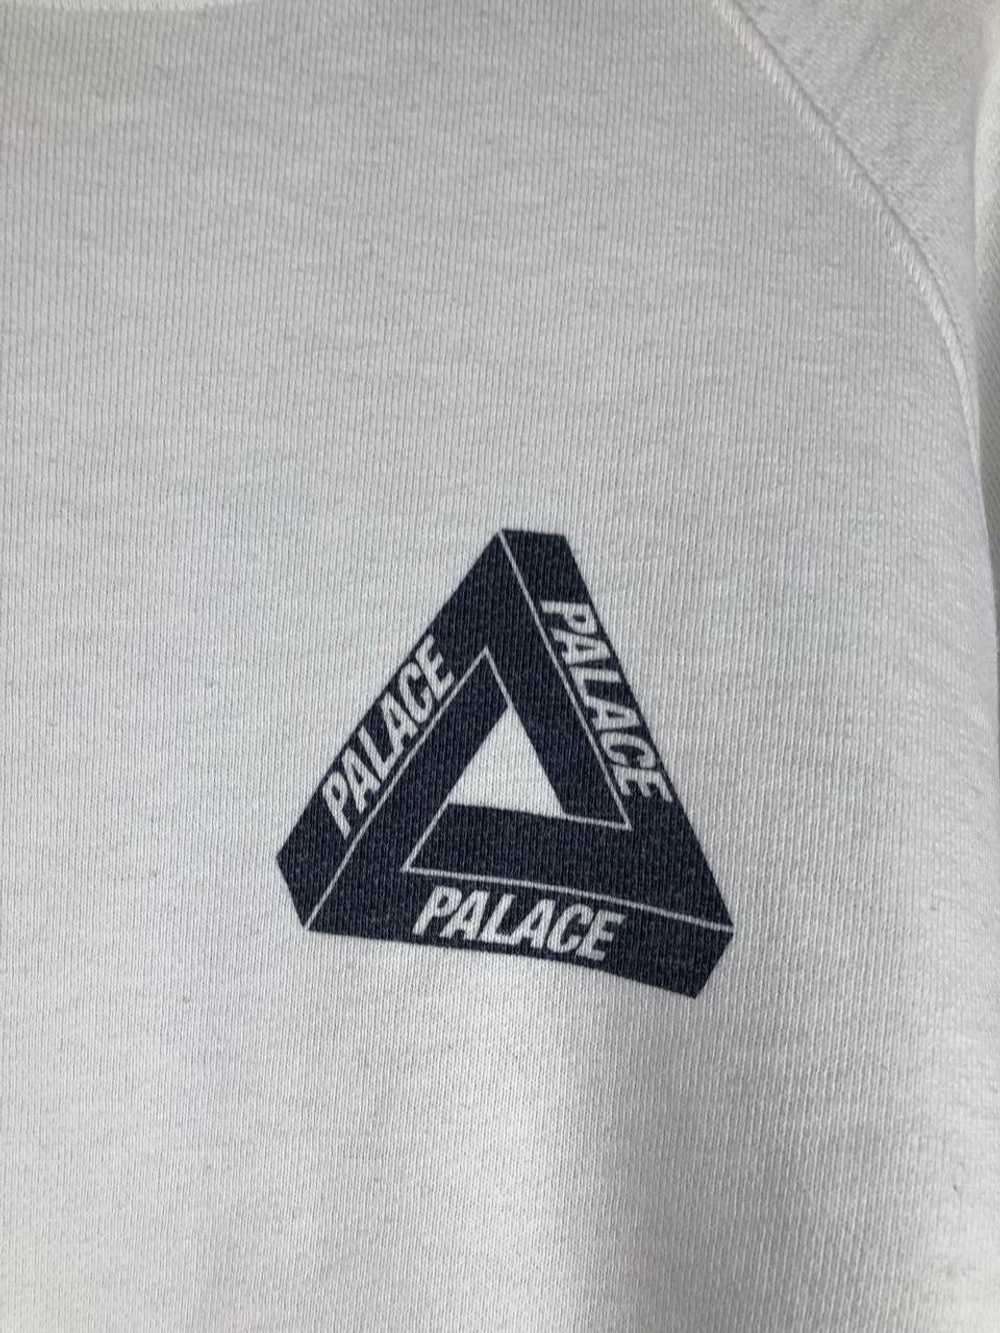 Palace Palace Tri-Line Jumper Sweatshirt Men’s Si… - image 3